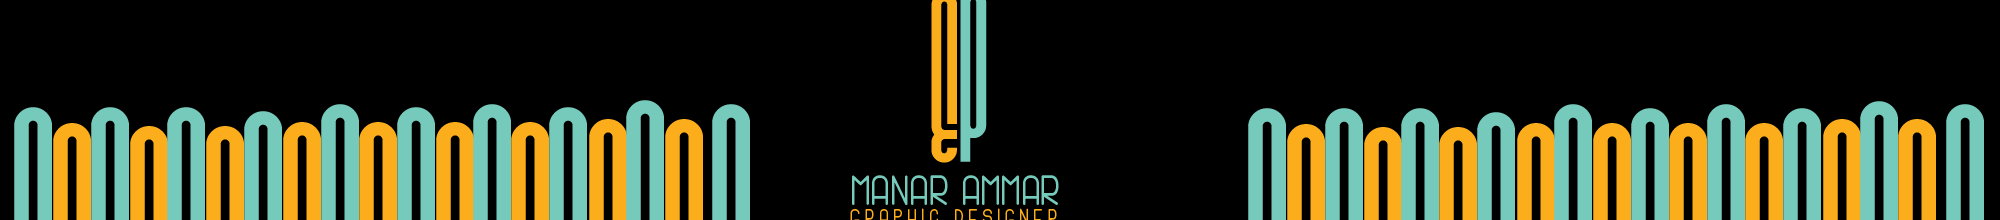 manar ammar's profile banner